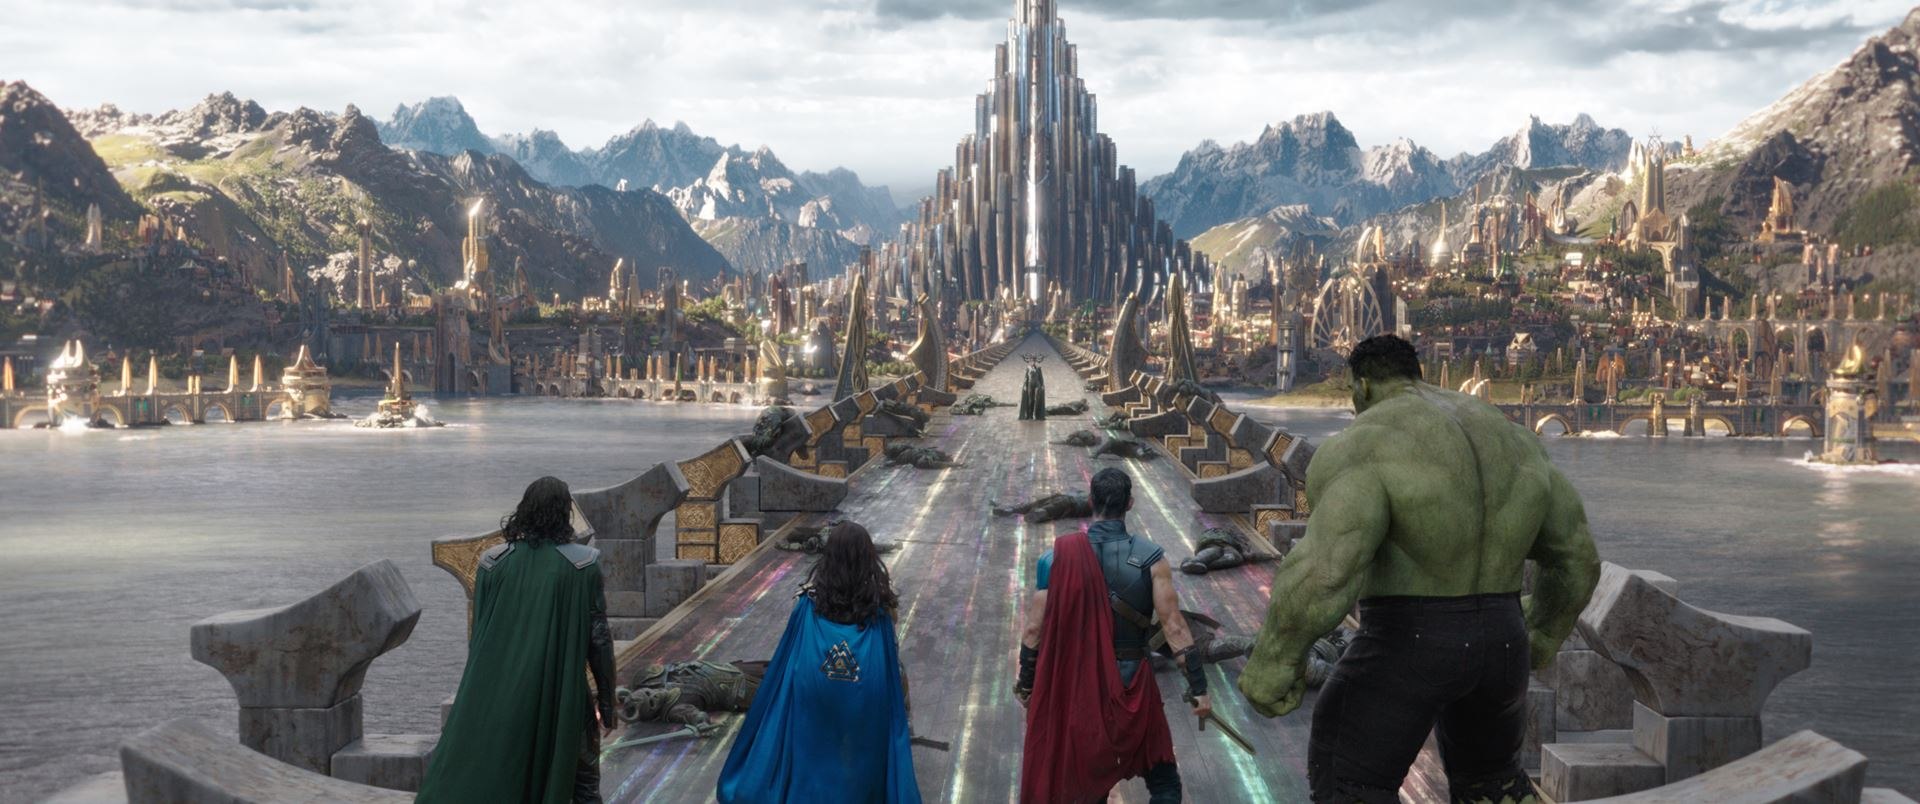 Thor: Ragnarok' Prompted 'Avengers: Infinity War' Rewrites